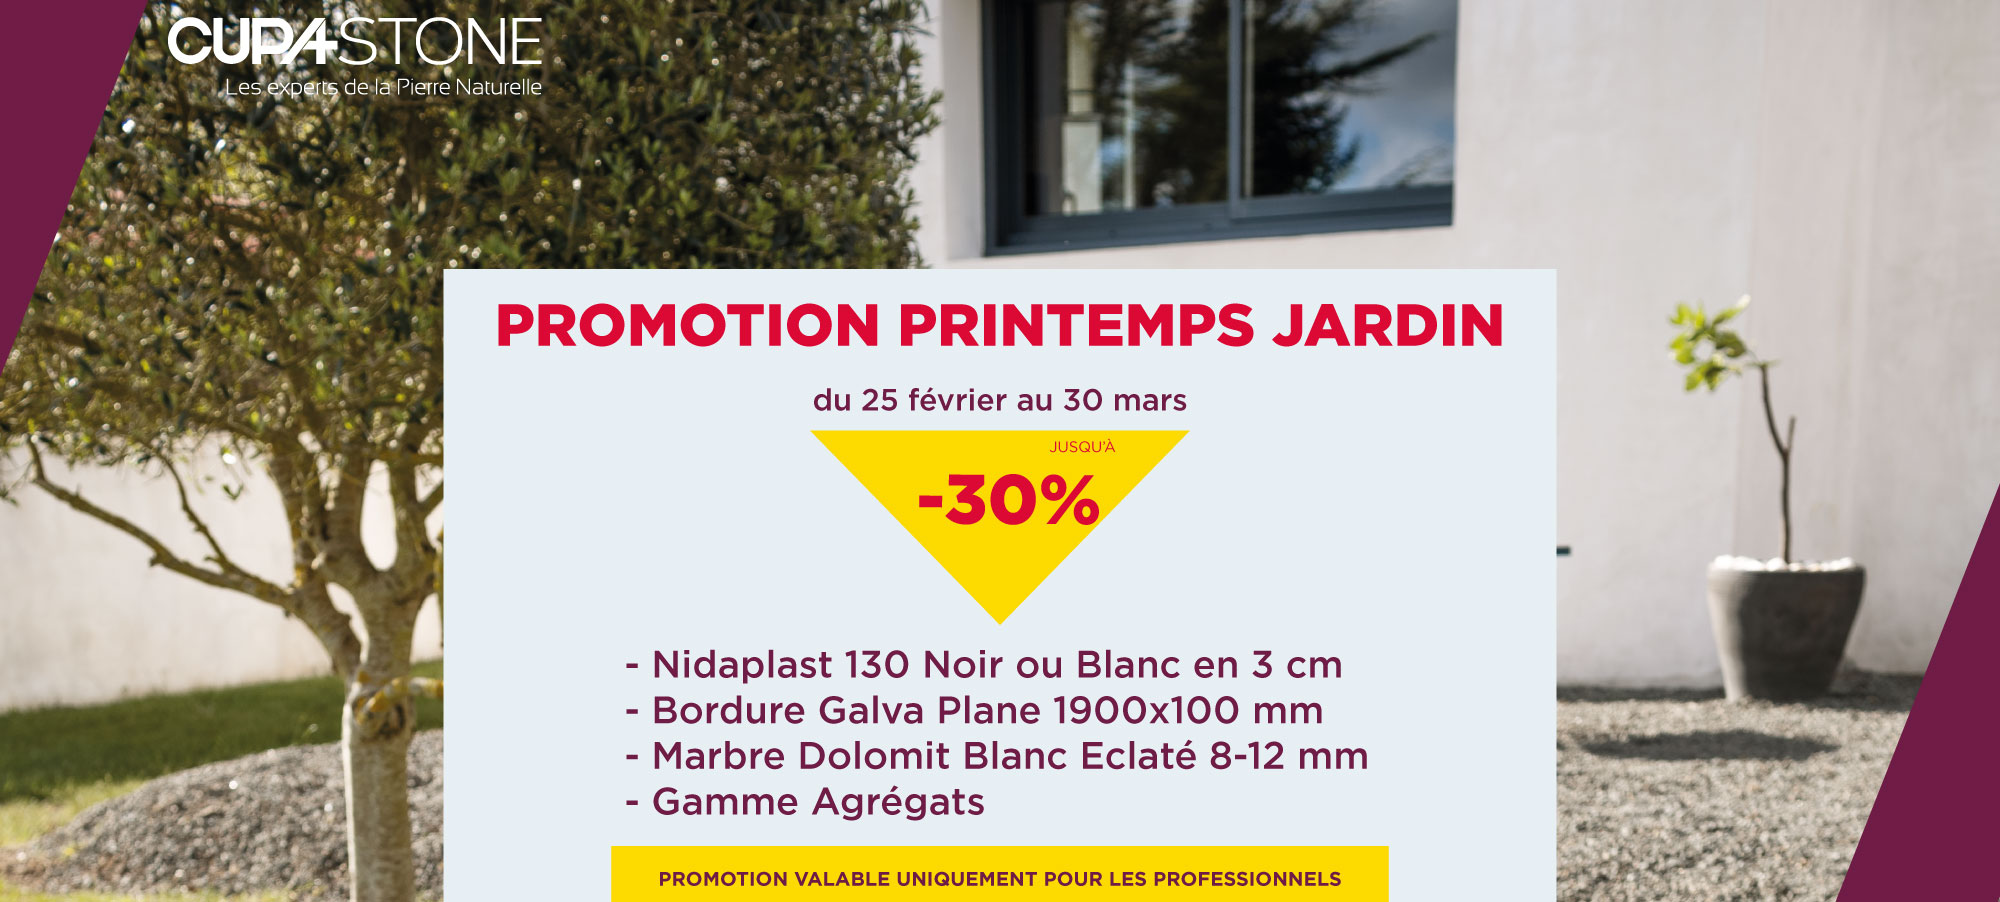 Promotion Printems Jardin CUPA STONE